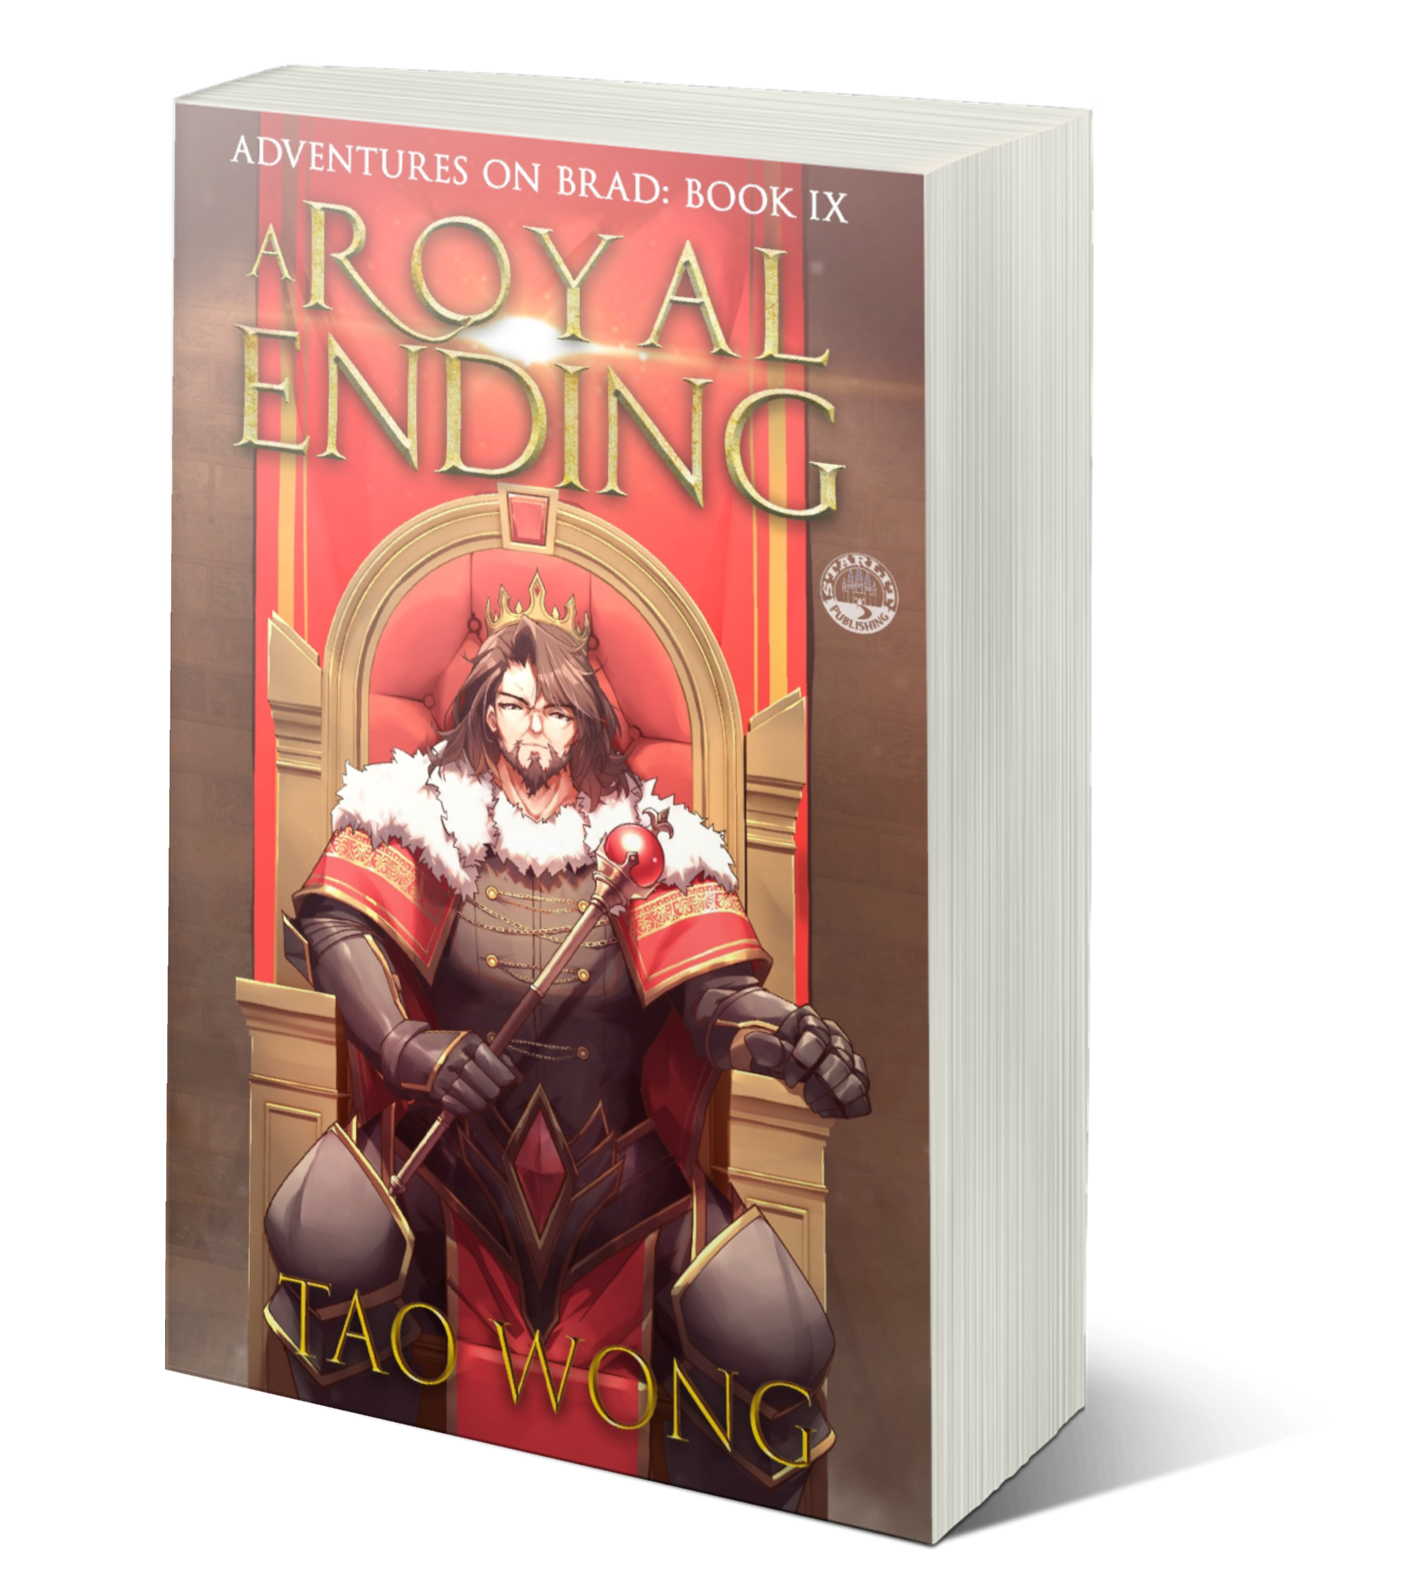 A Royal Ending (Adventures on Brad #9)